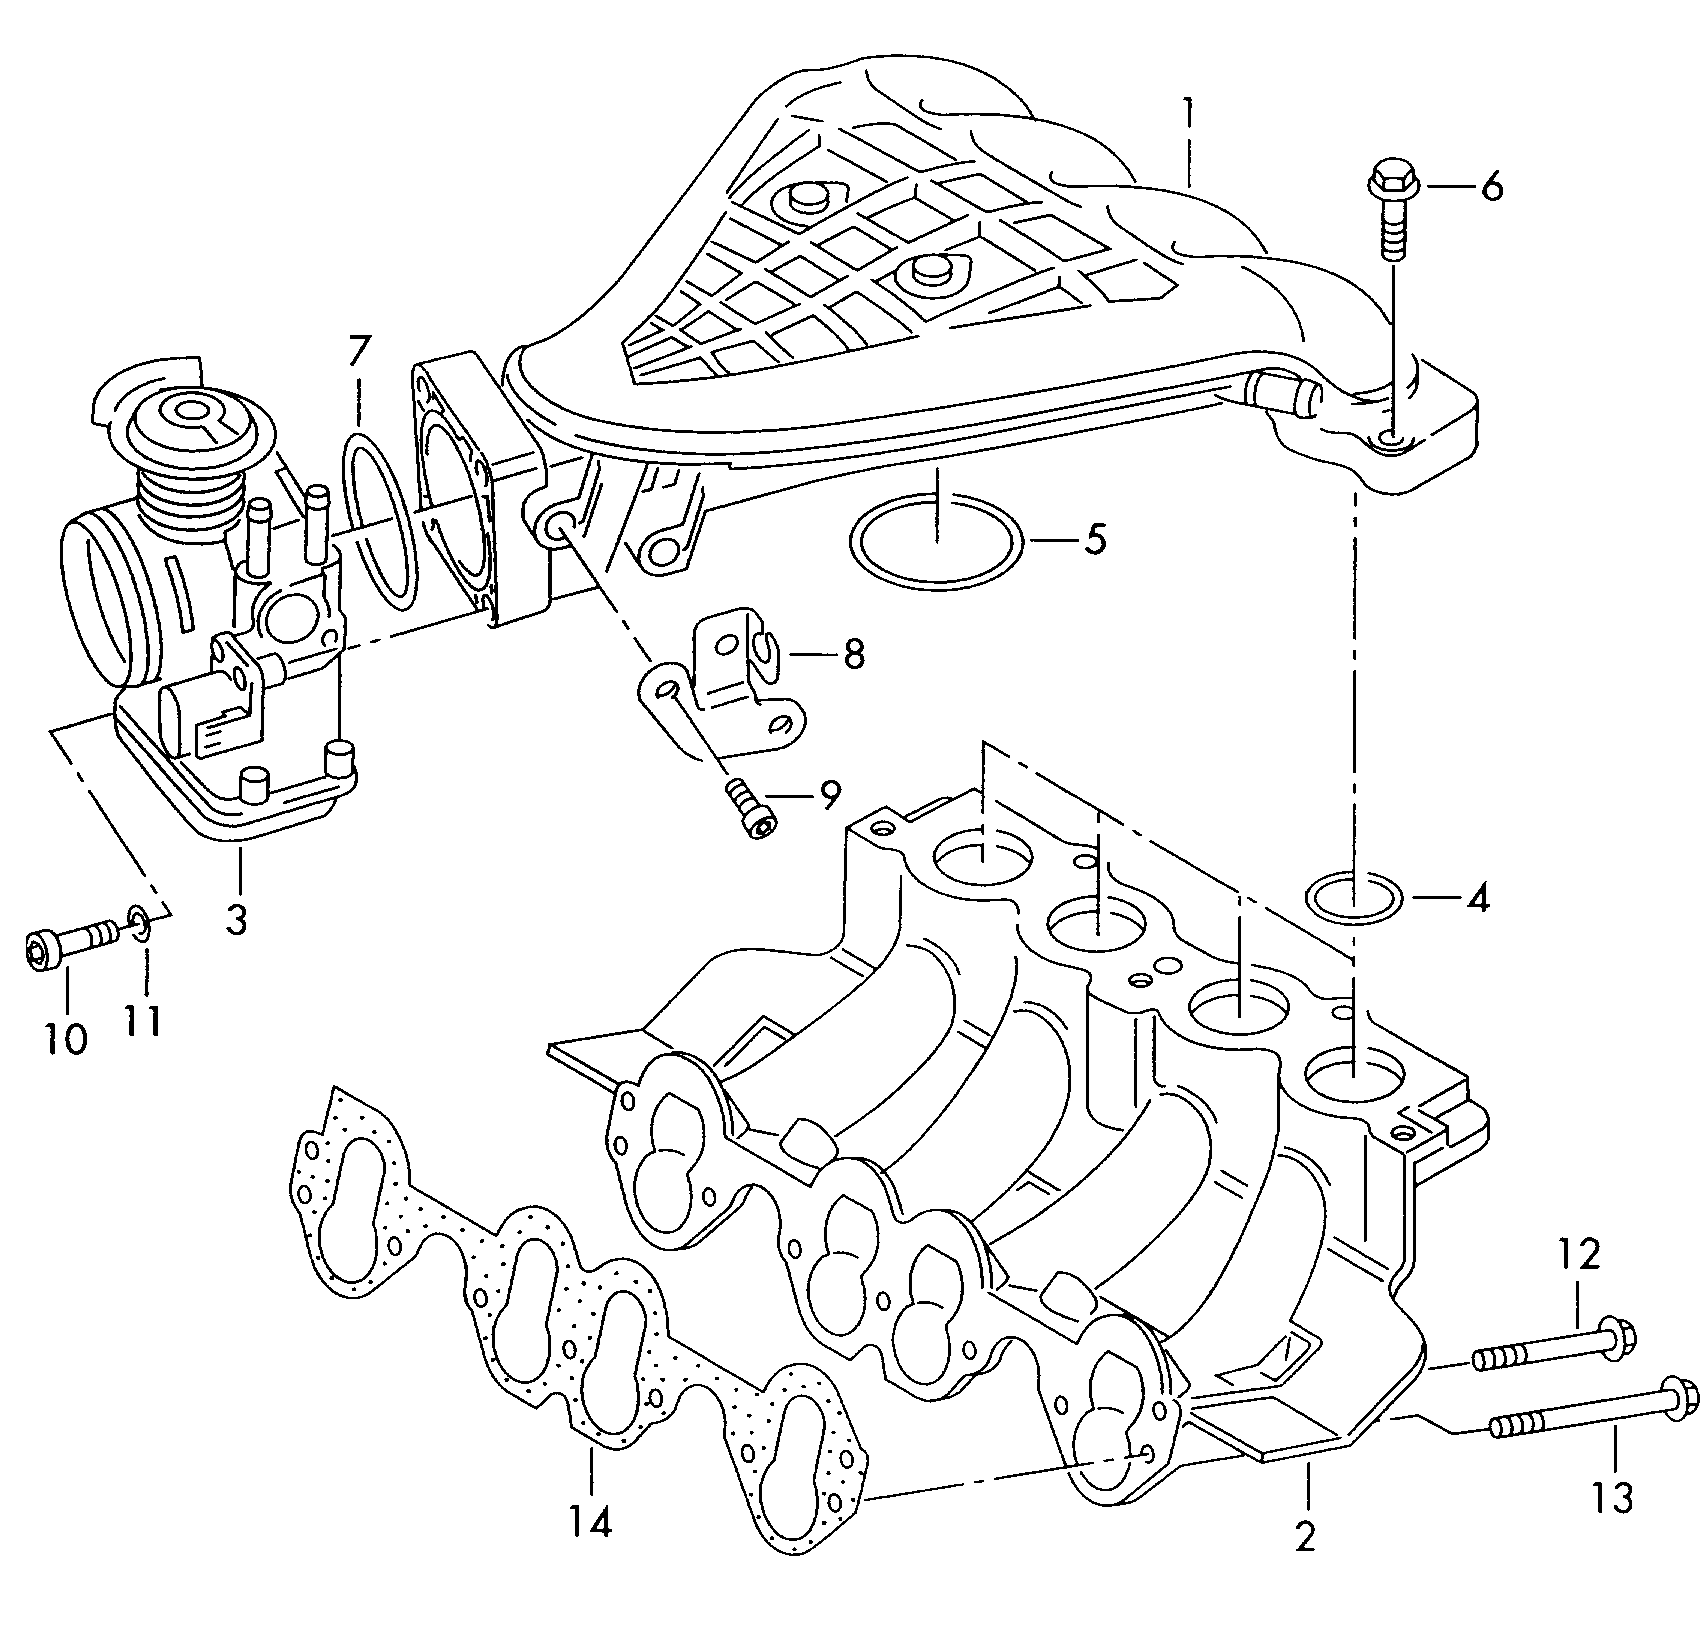 Emme sistemi; Gaz kelebeği kapağı kontrol ün - Alhambra(AL)  